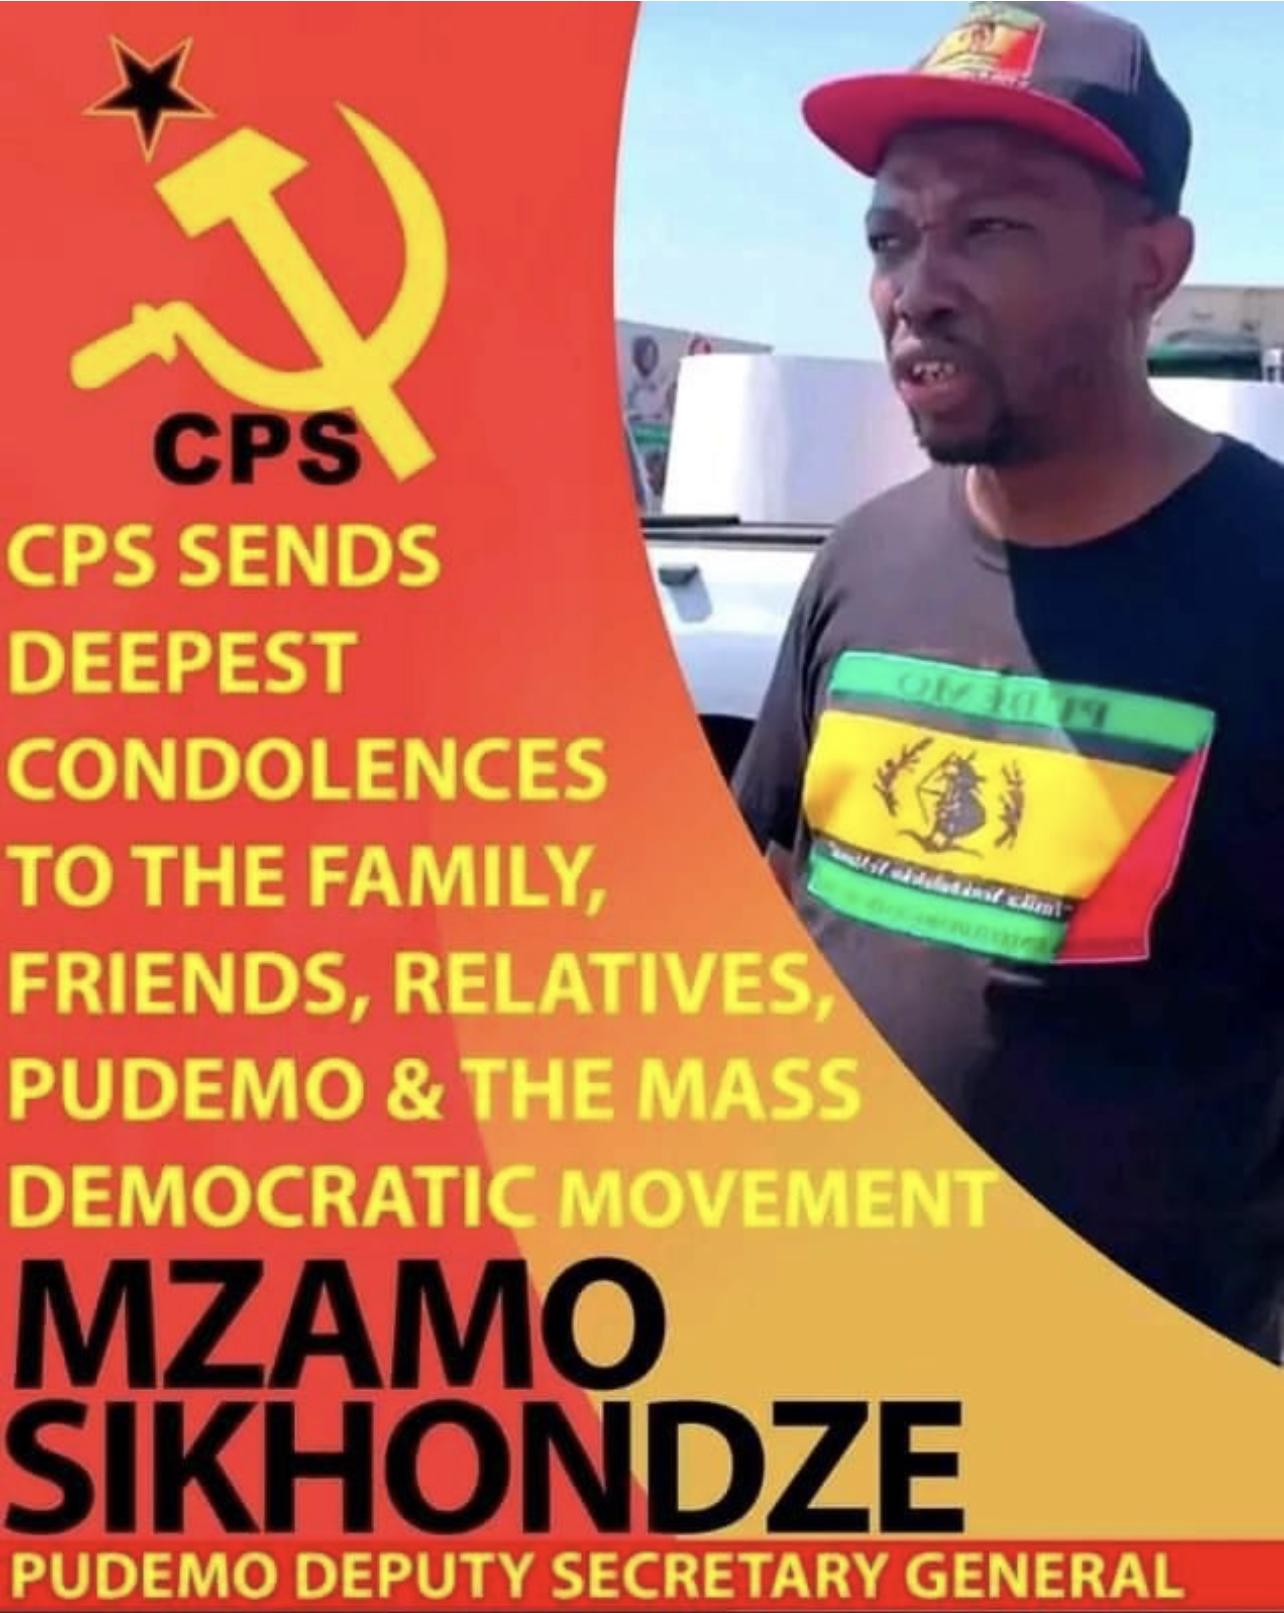 Communist Party mourns death of PUDEMO Deputy Secretary General Mzamo Sikhondze